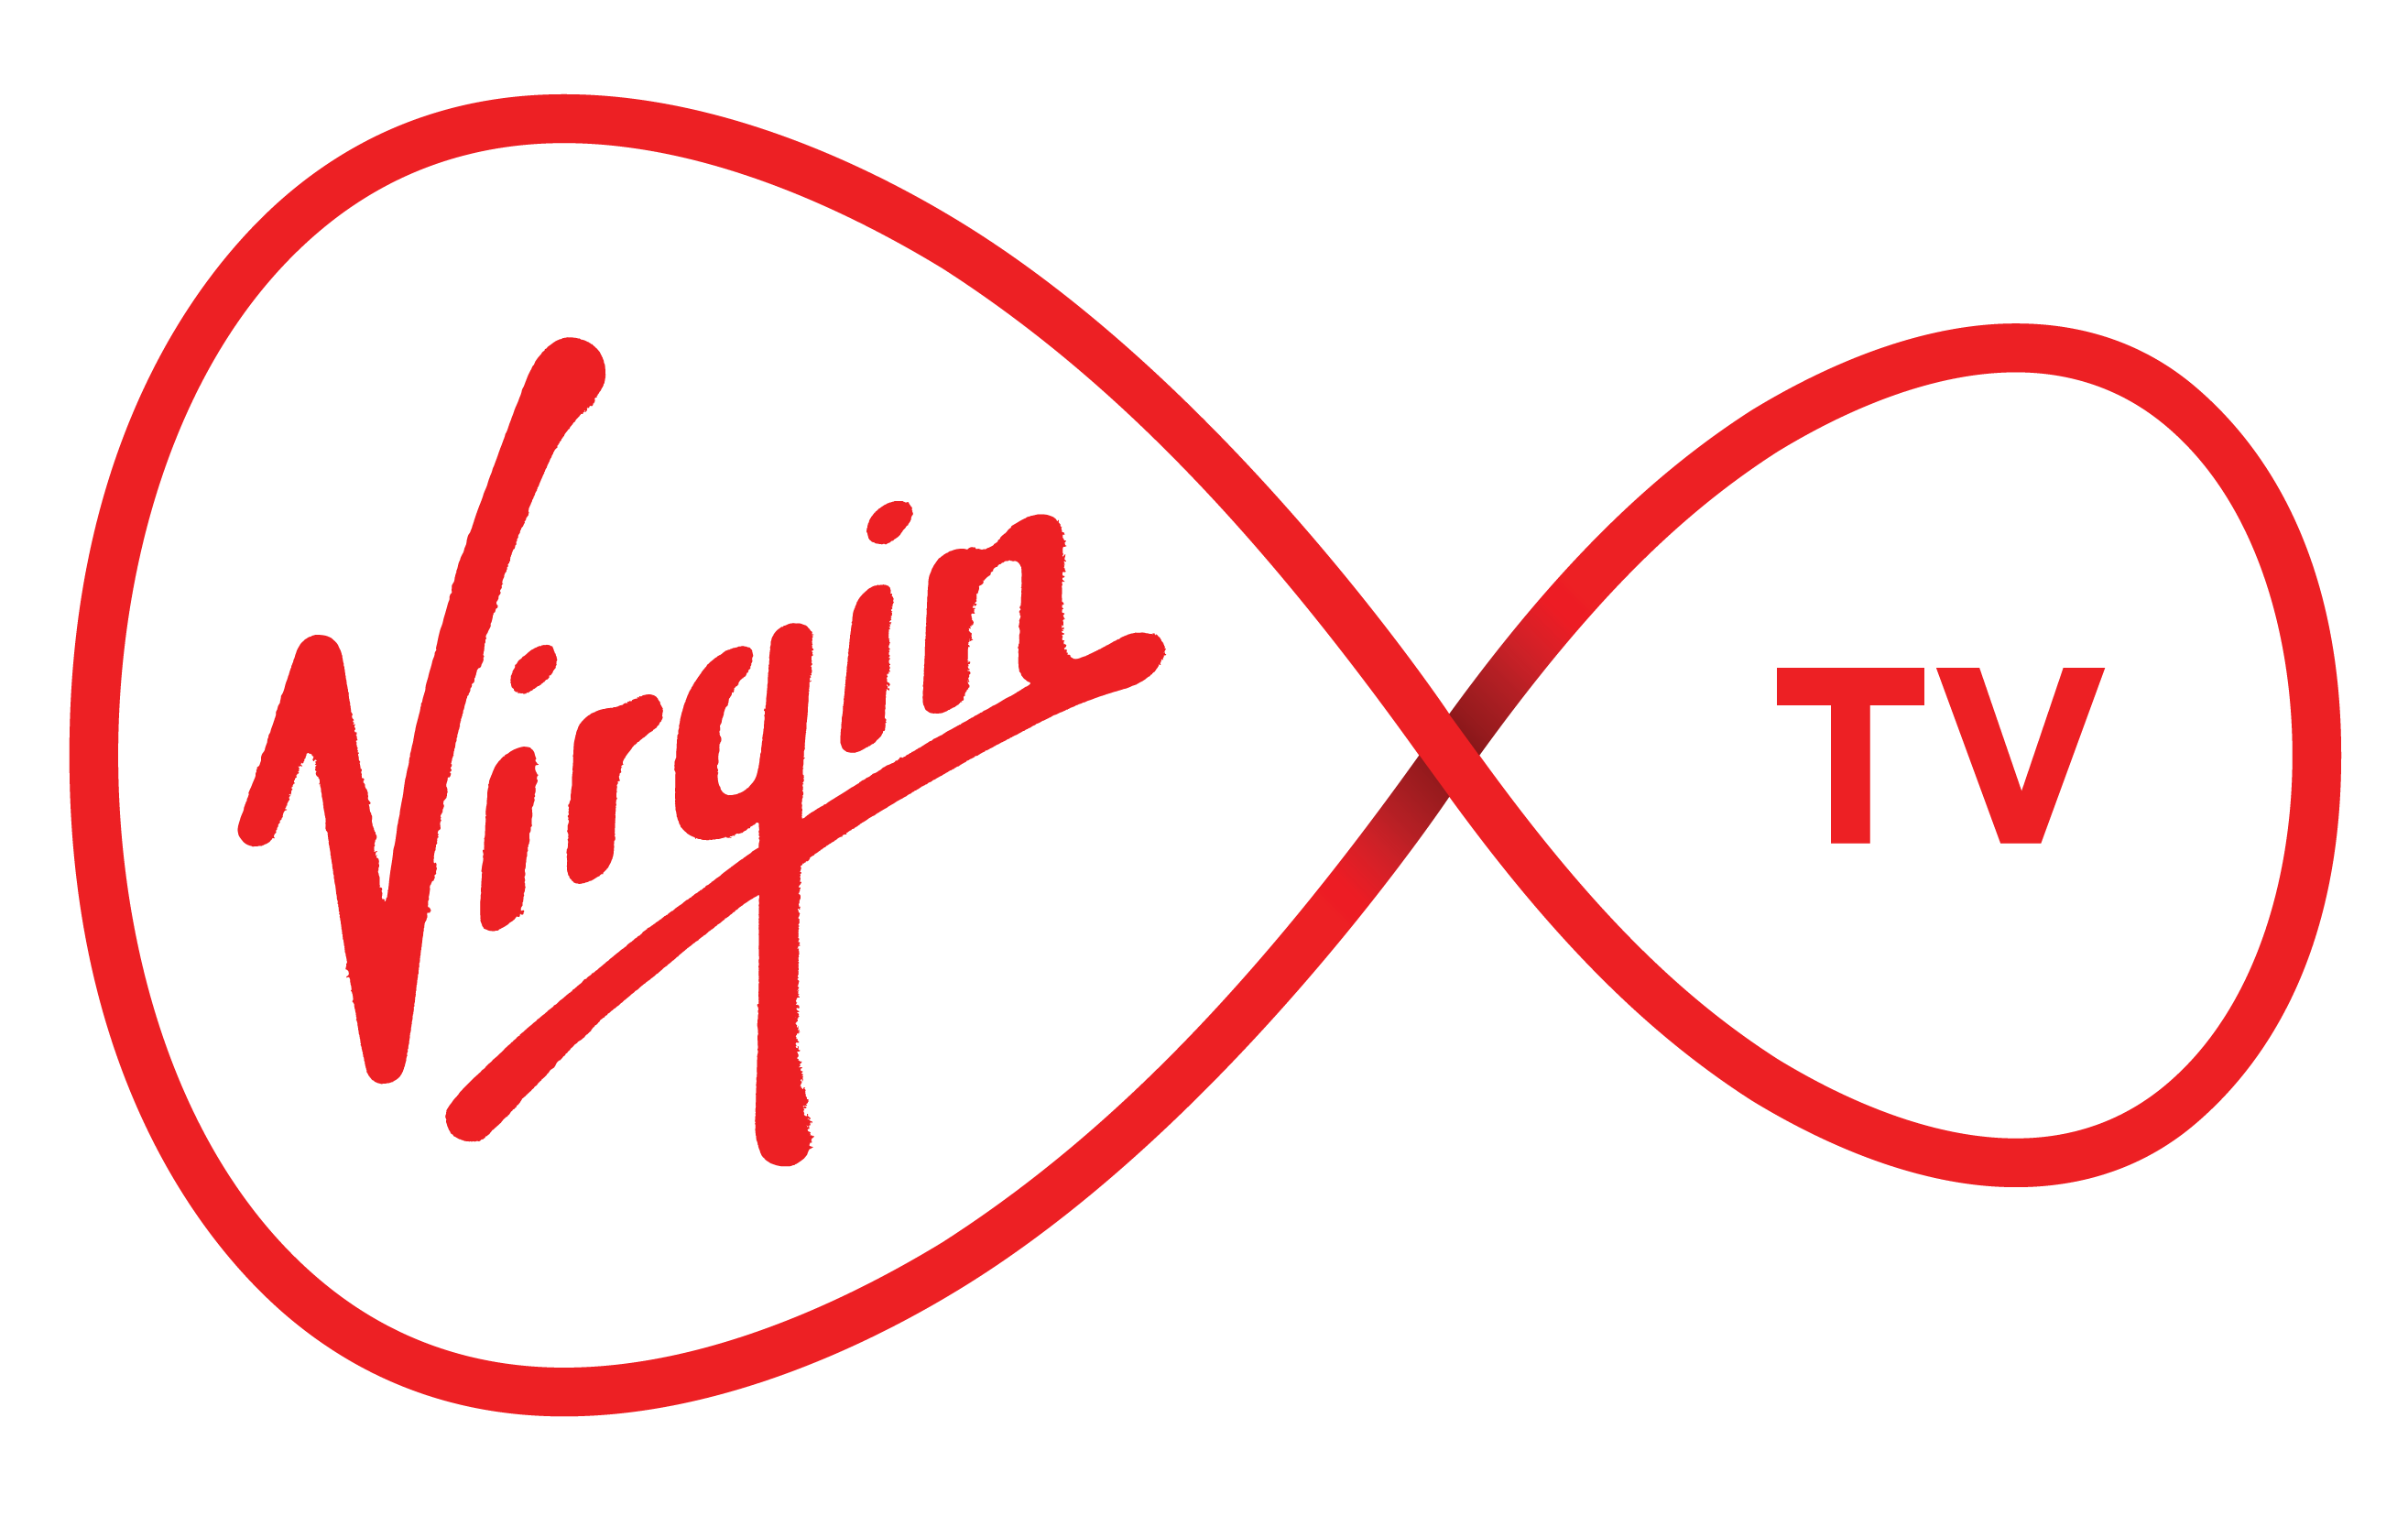 Virgin Media Logo, Before and